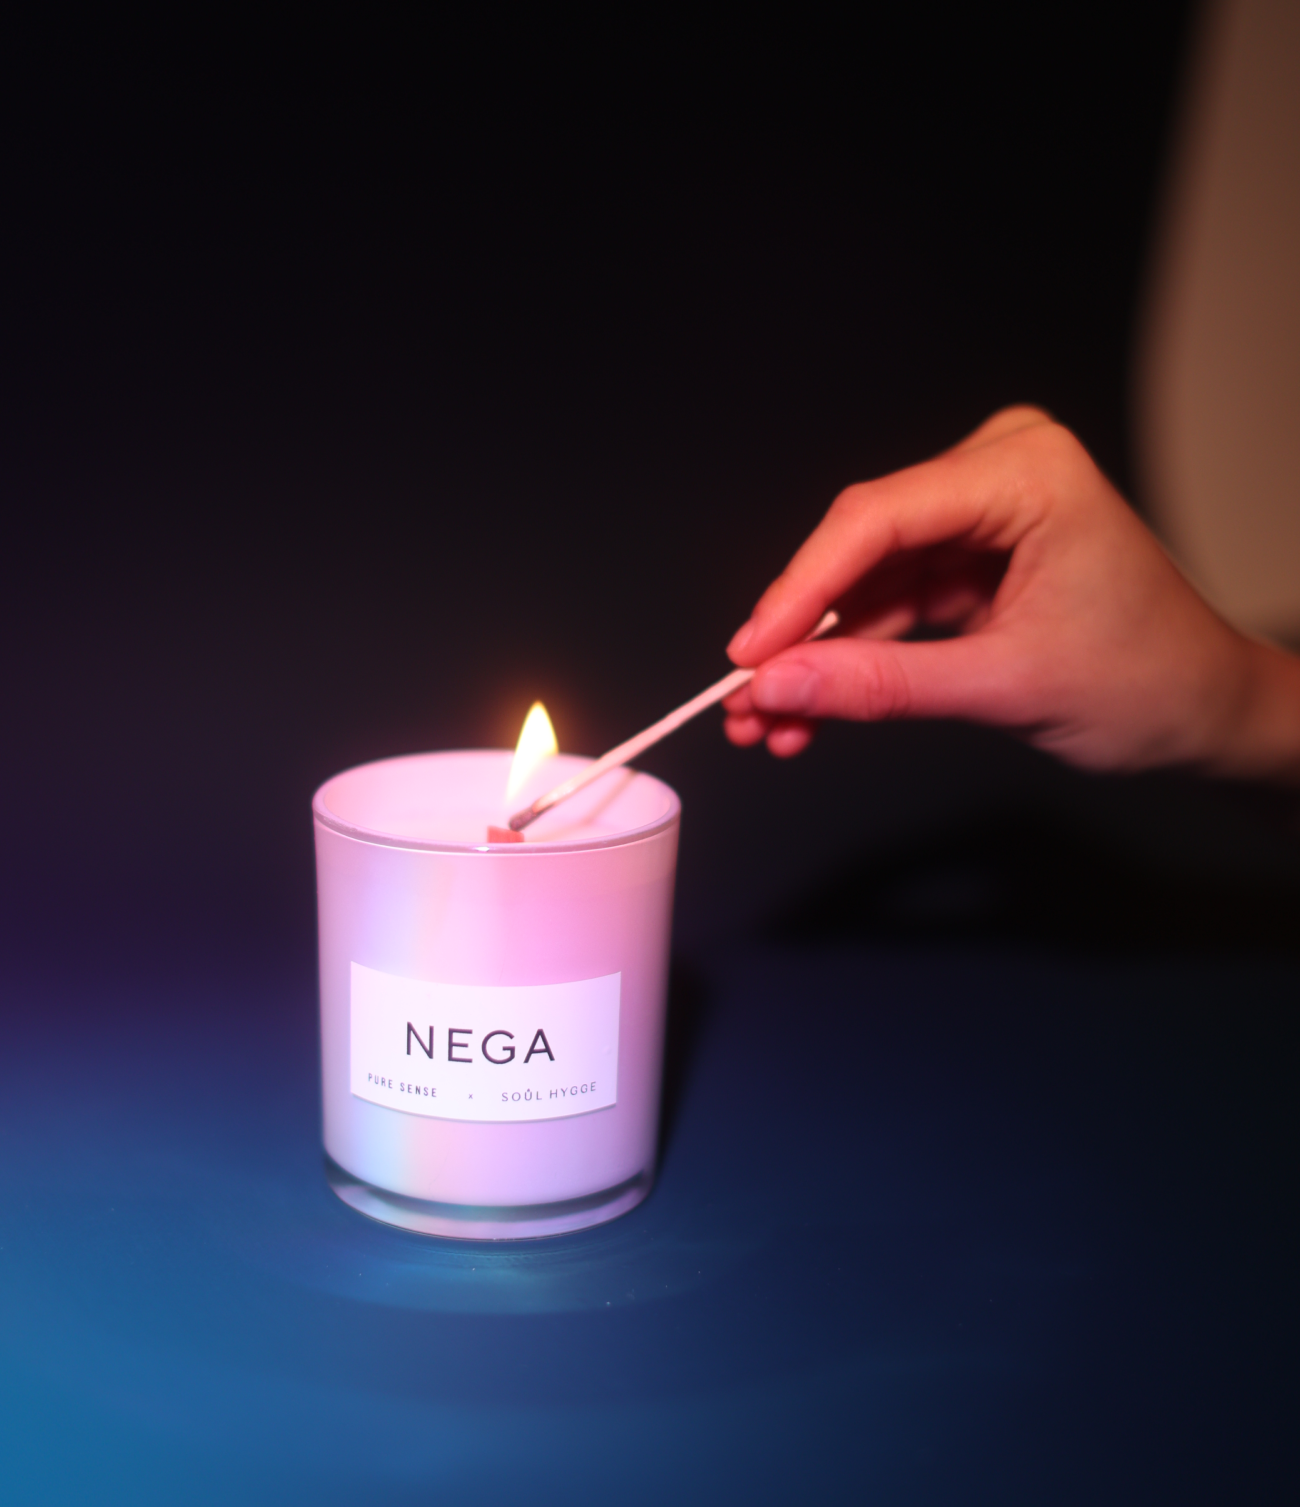 Изображение флакона аромата NEGA